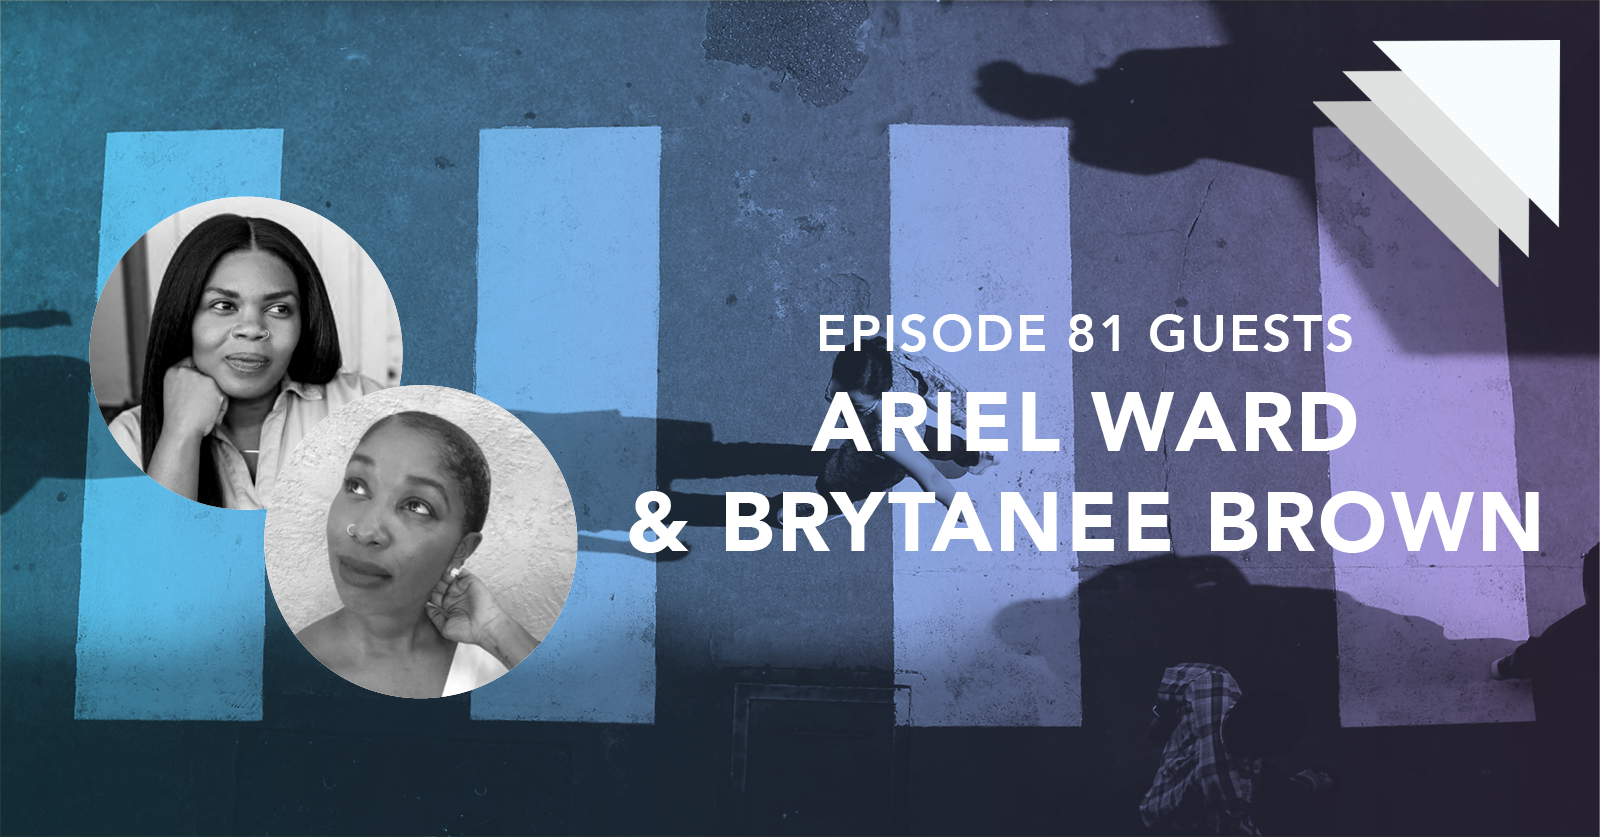 Episode 81 guests Ariel Ward and Brytanee Brown